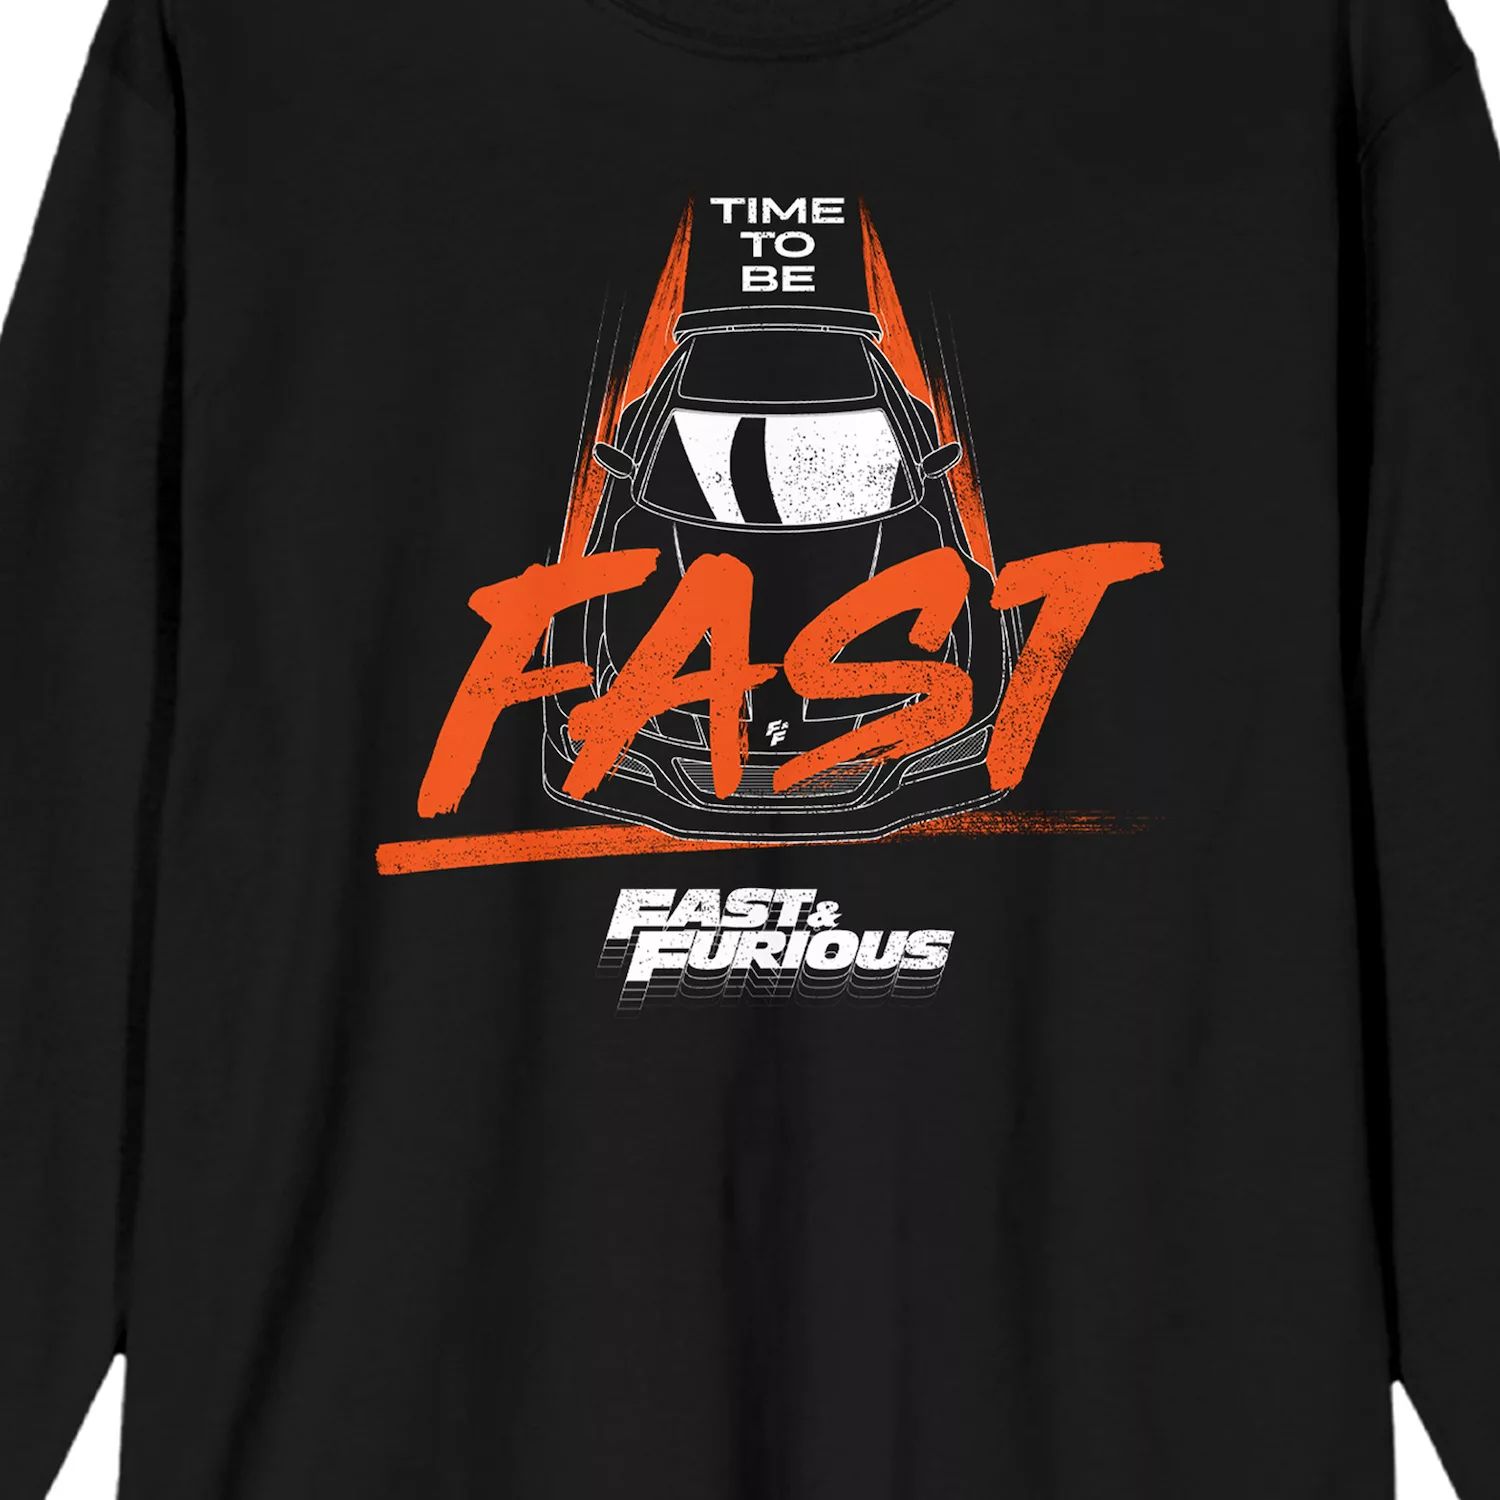 Мужская футболка с длинными рукавами The Fast And The Furious Time to Be Fast Licensed Character цена и фото